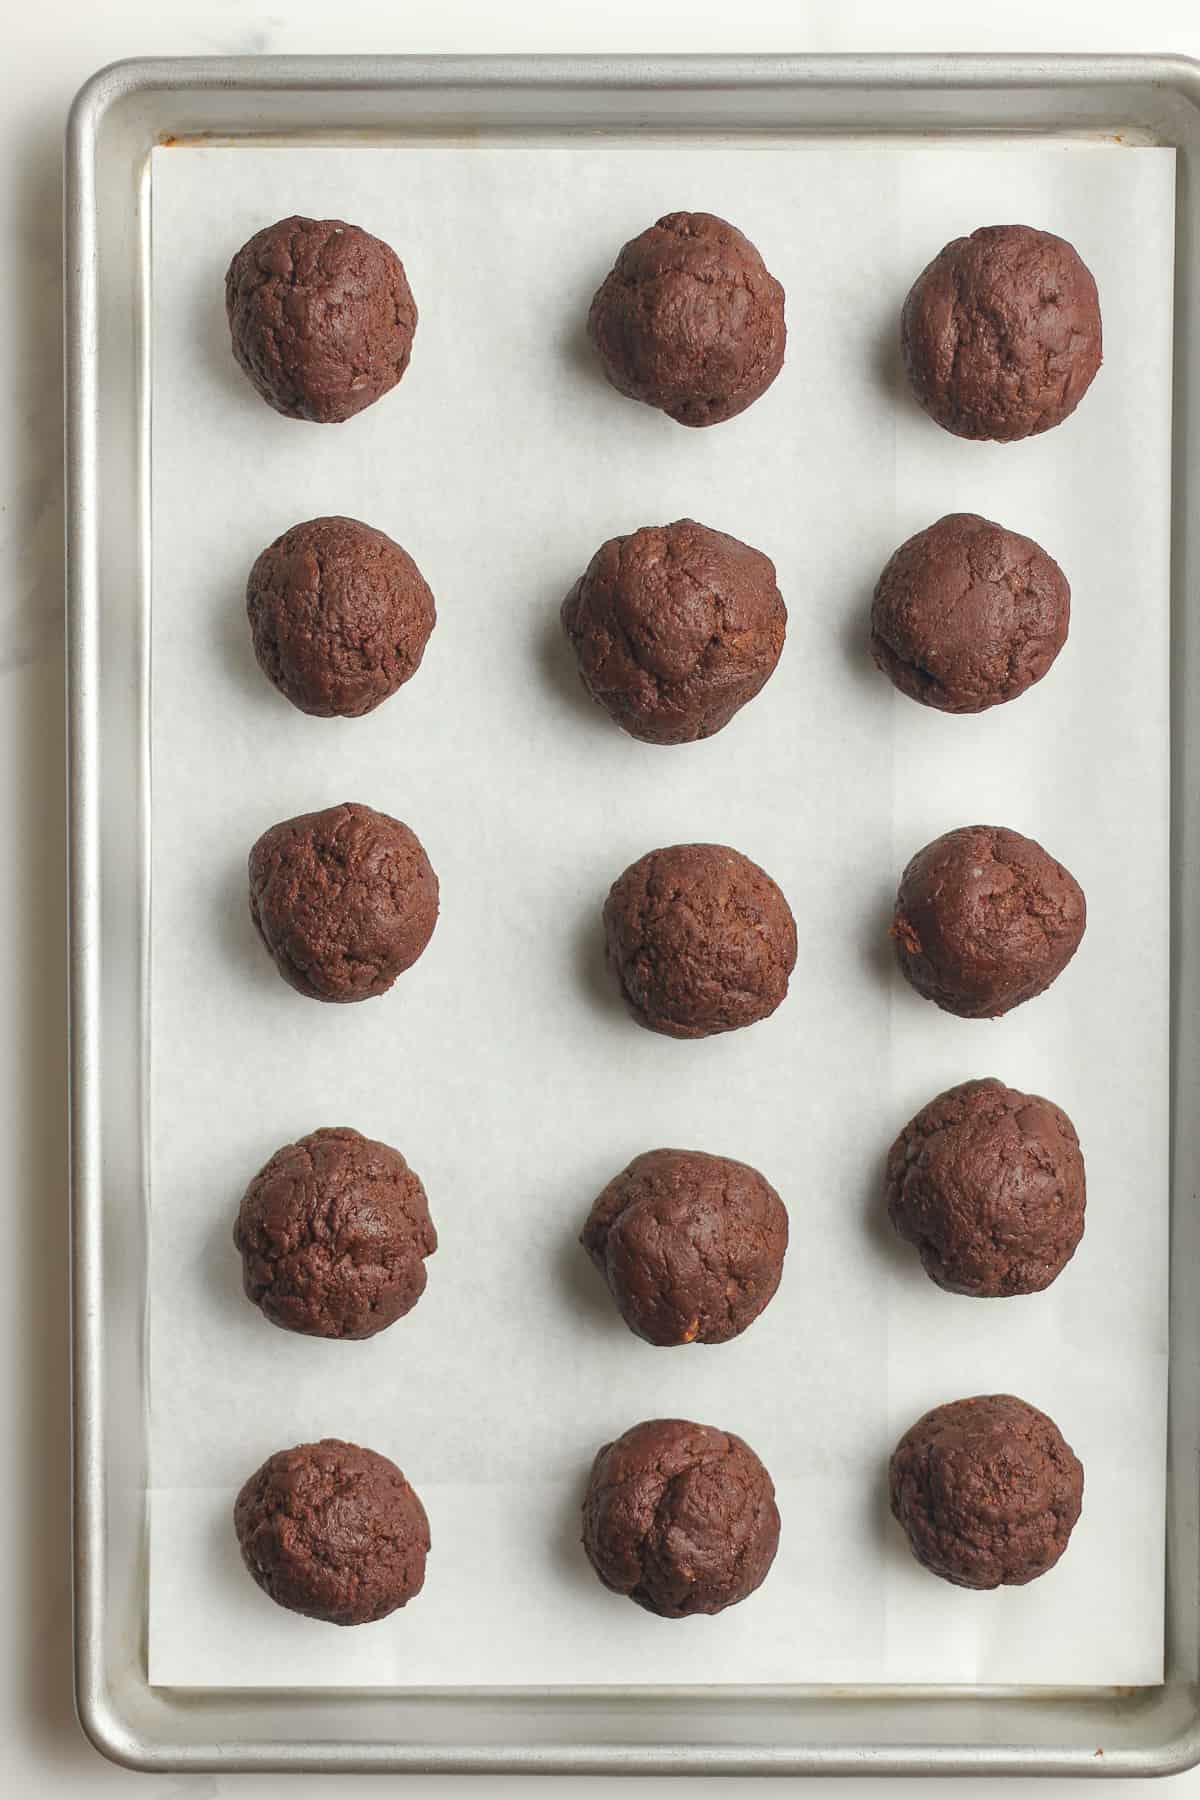 A pan of 15 cookie balls.